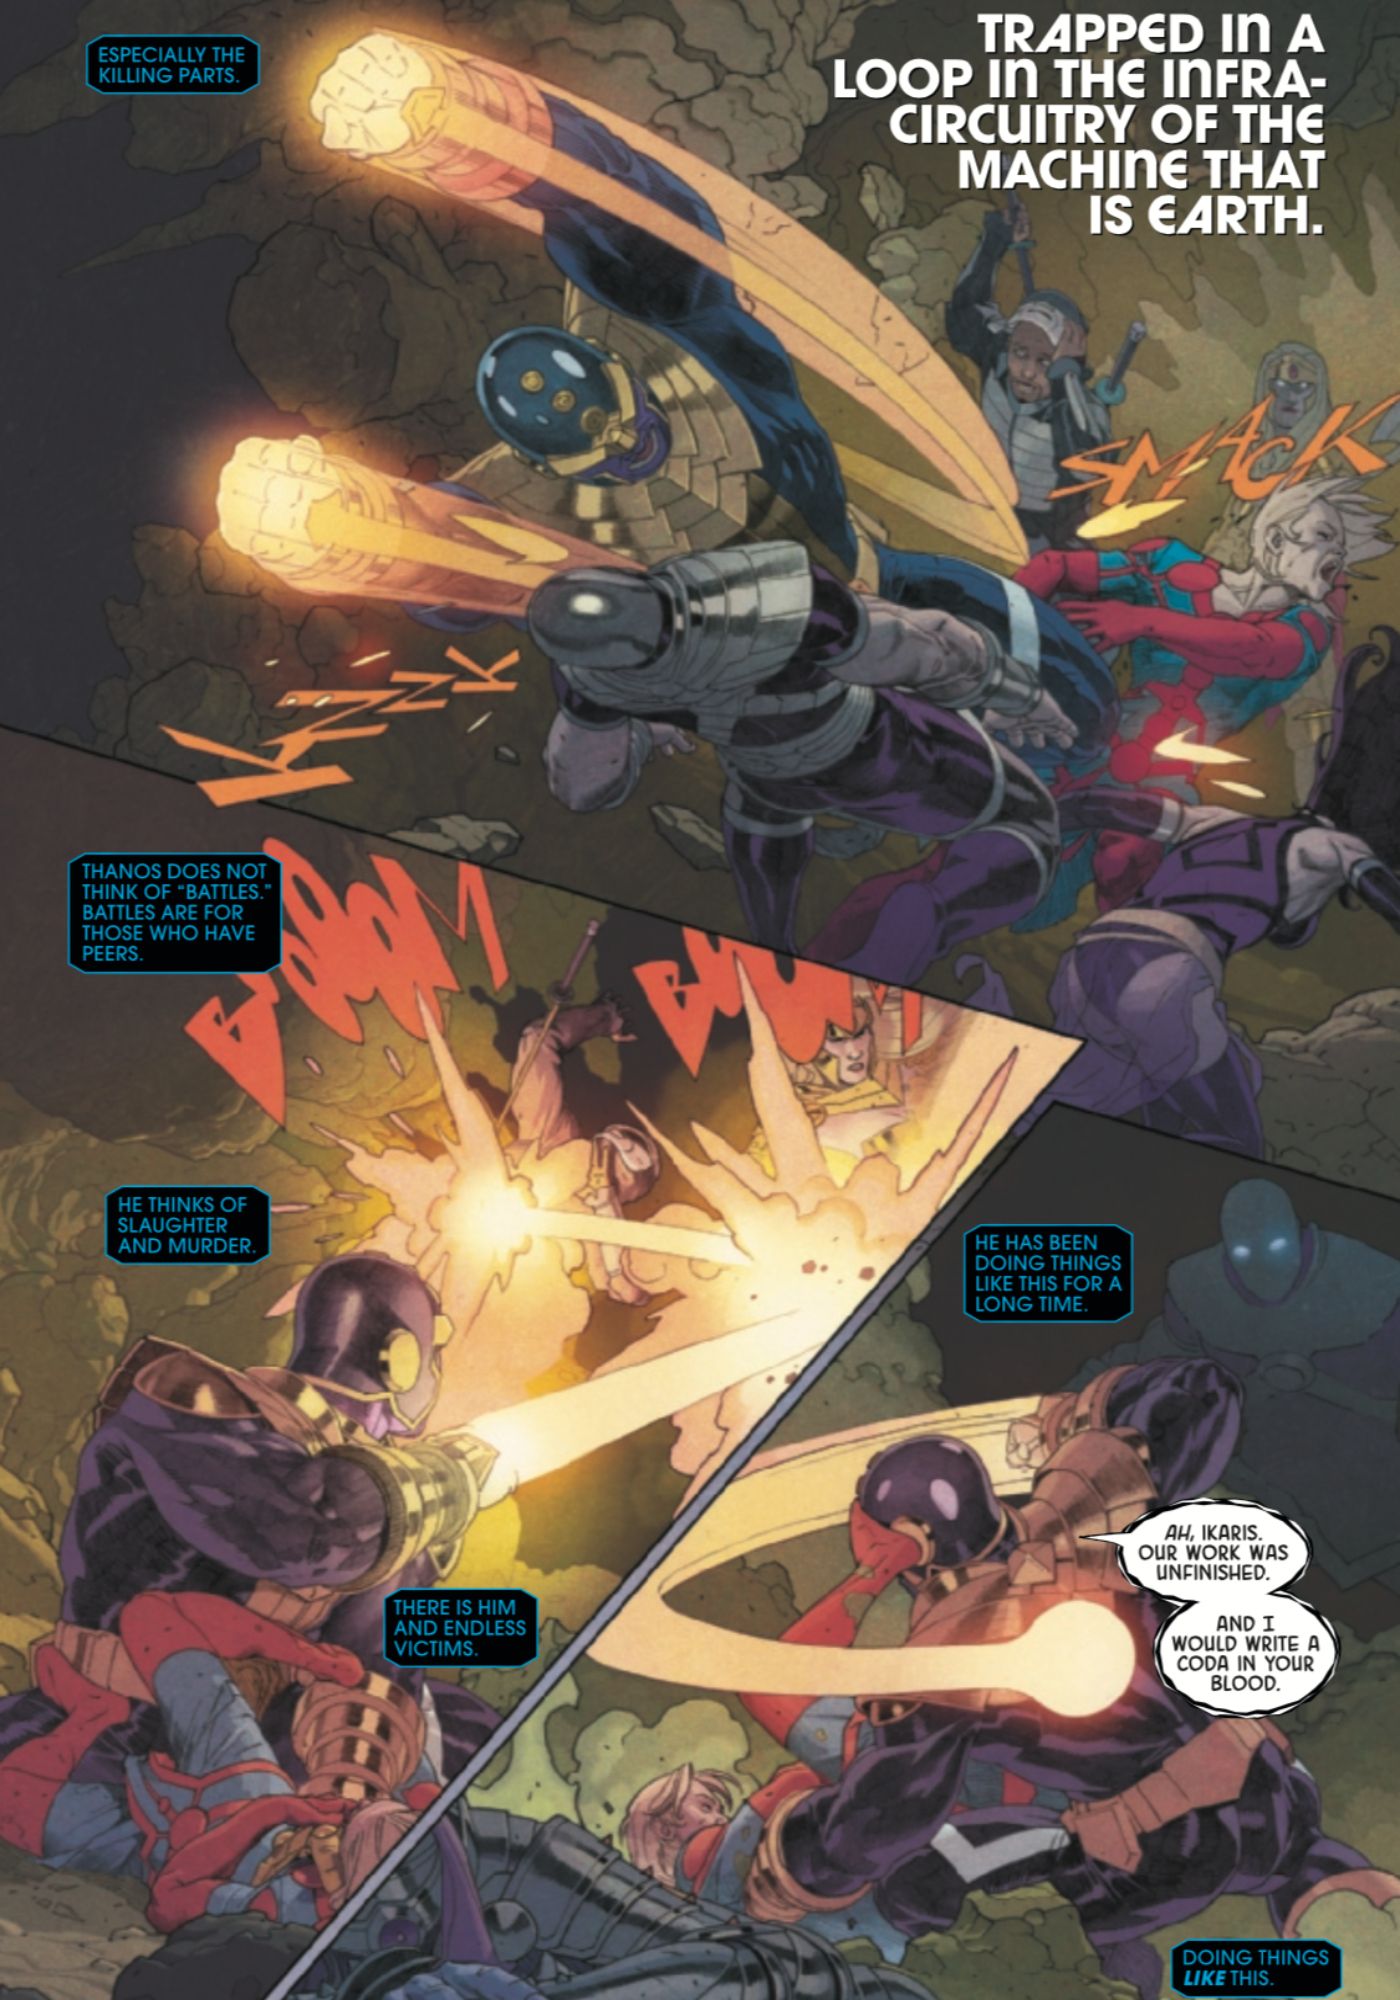 Thanos MCU Return